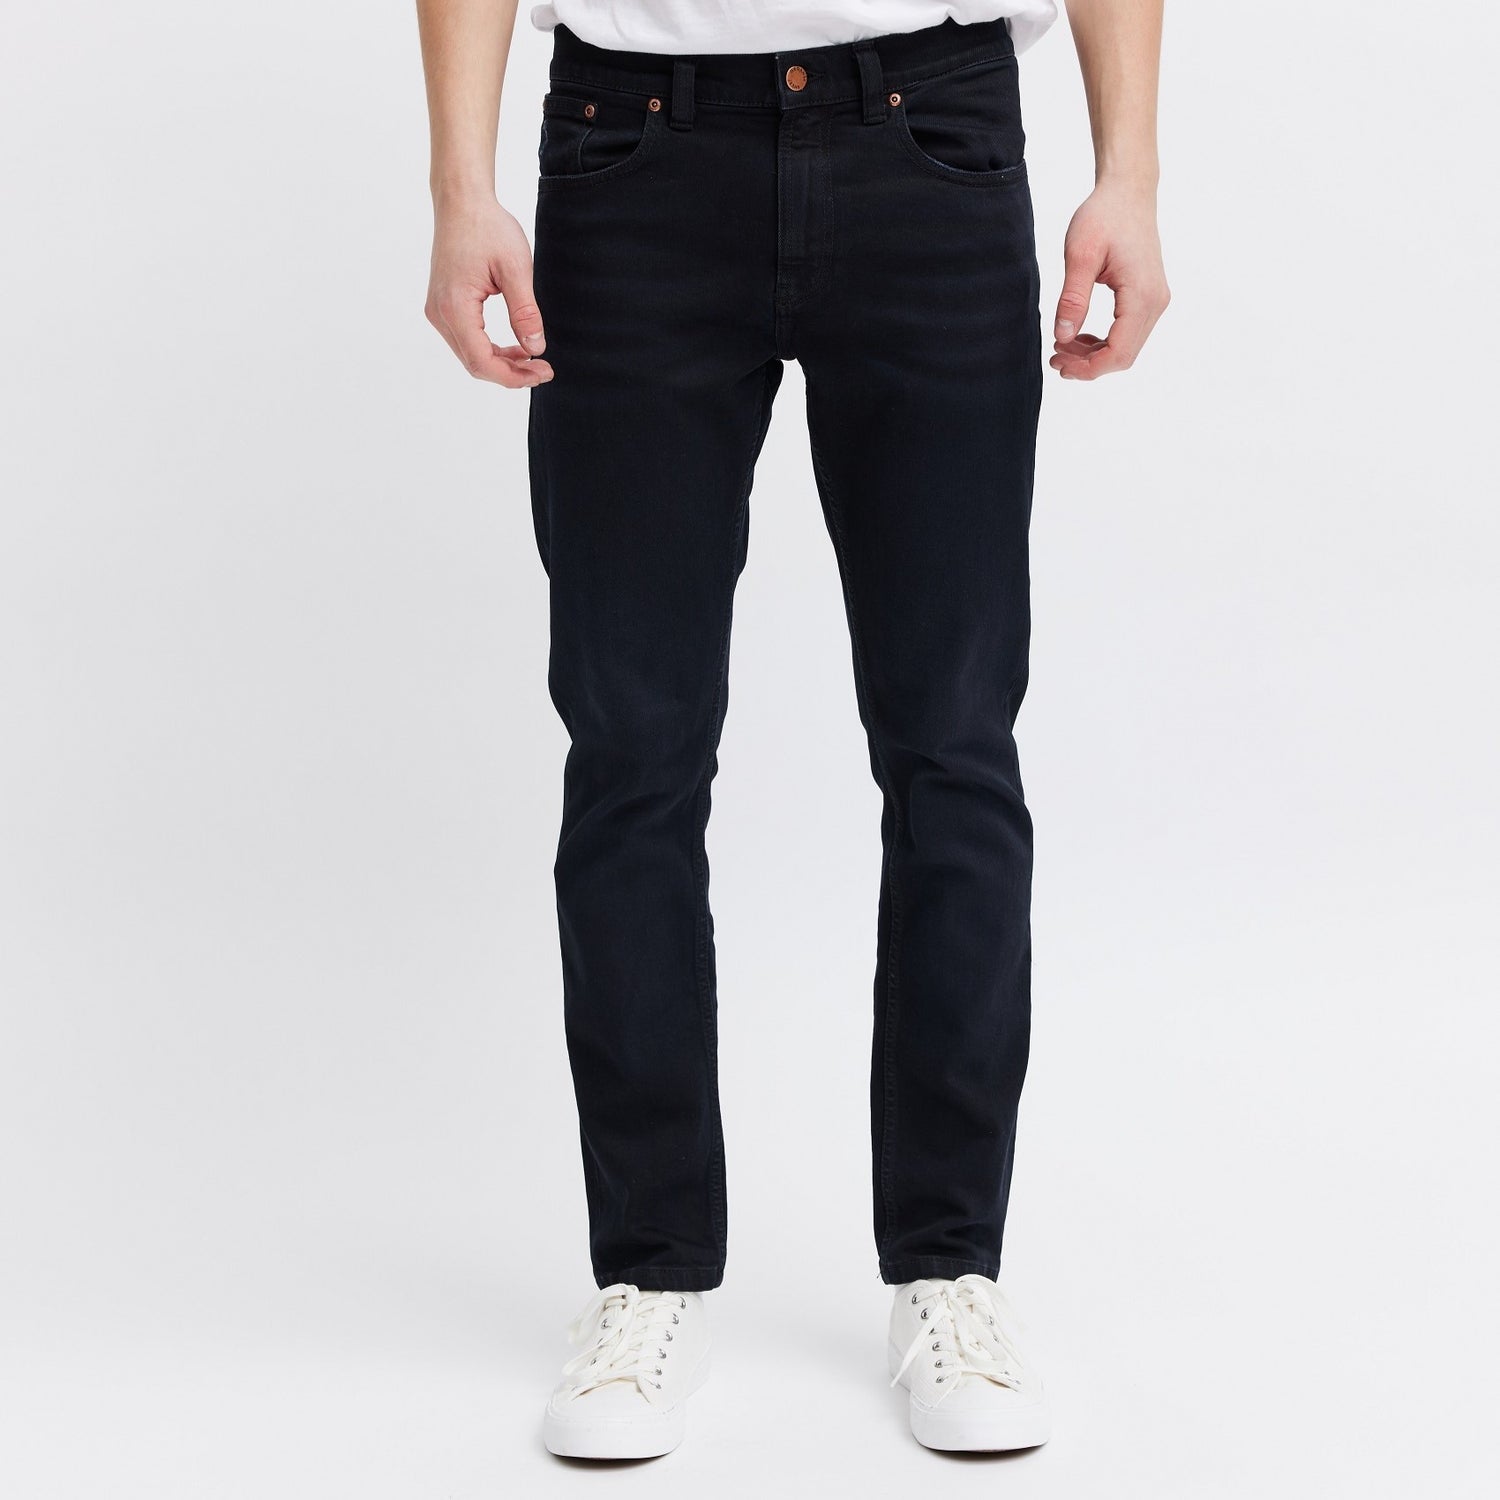 Men's black jeans organic